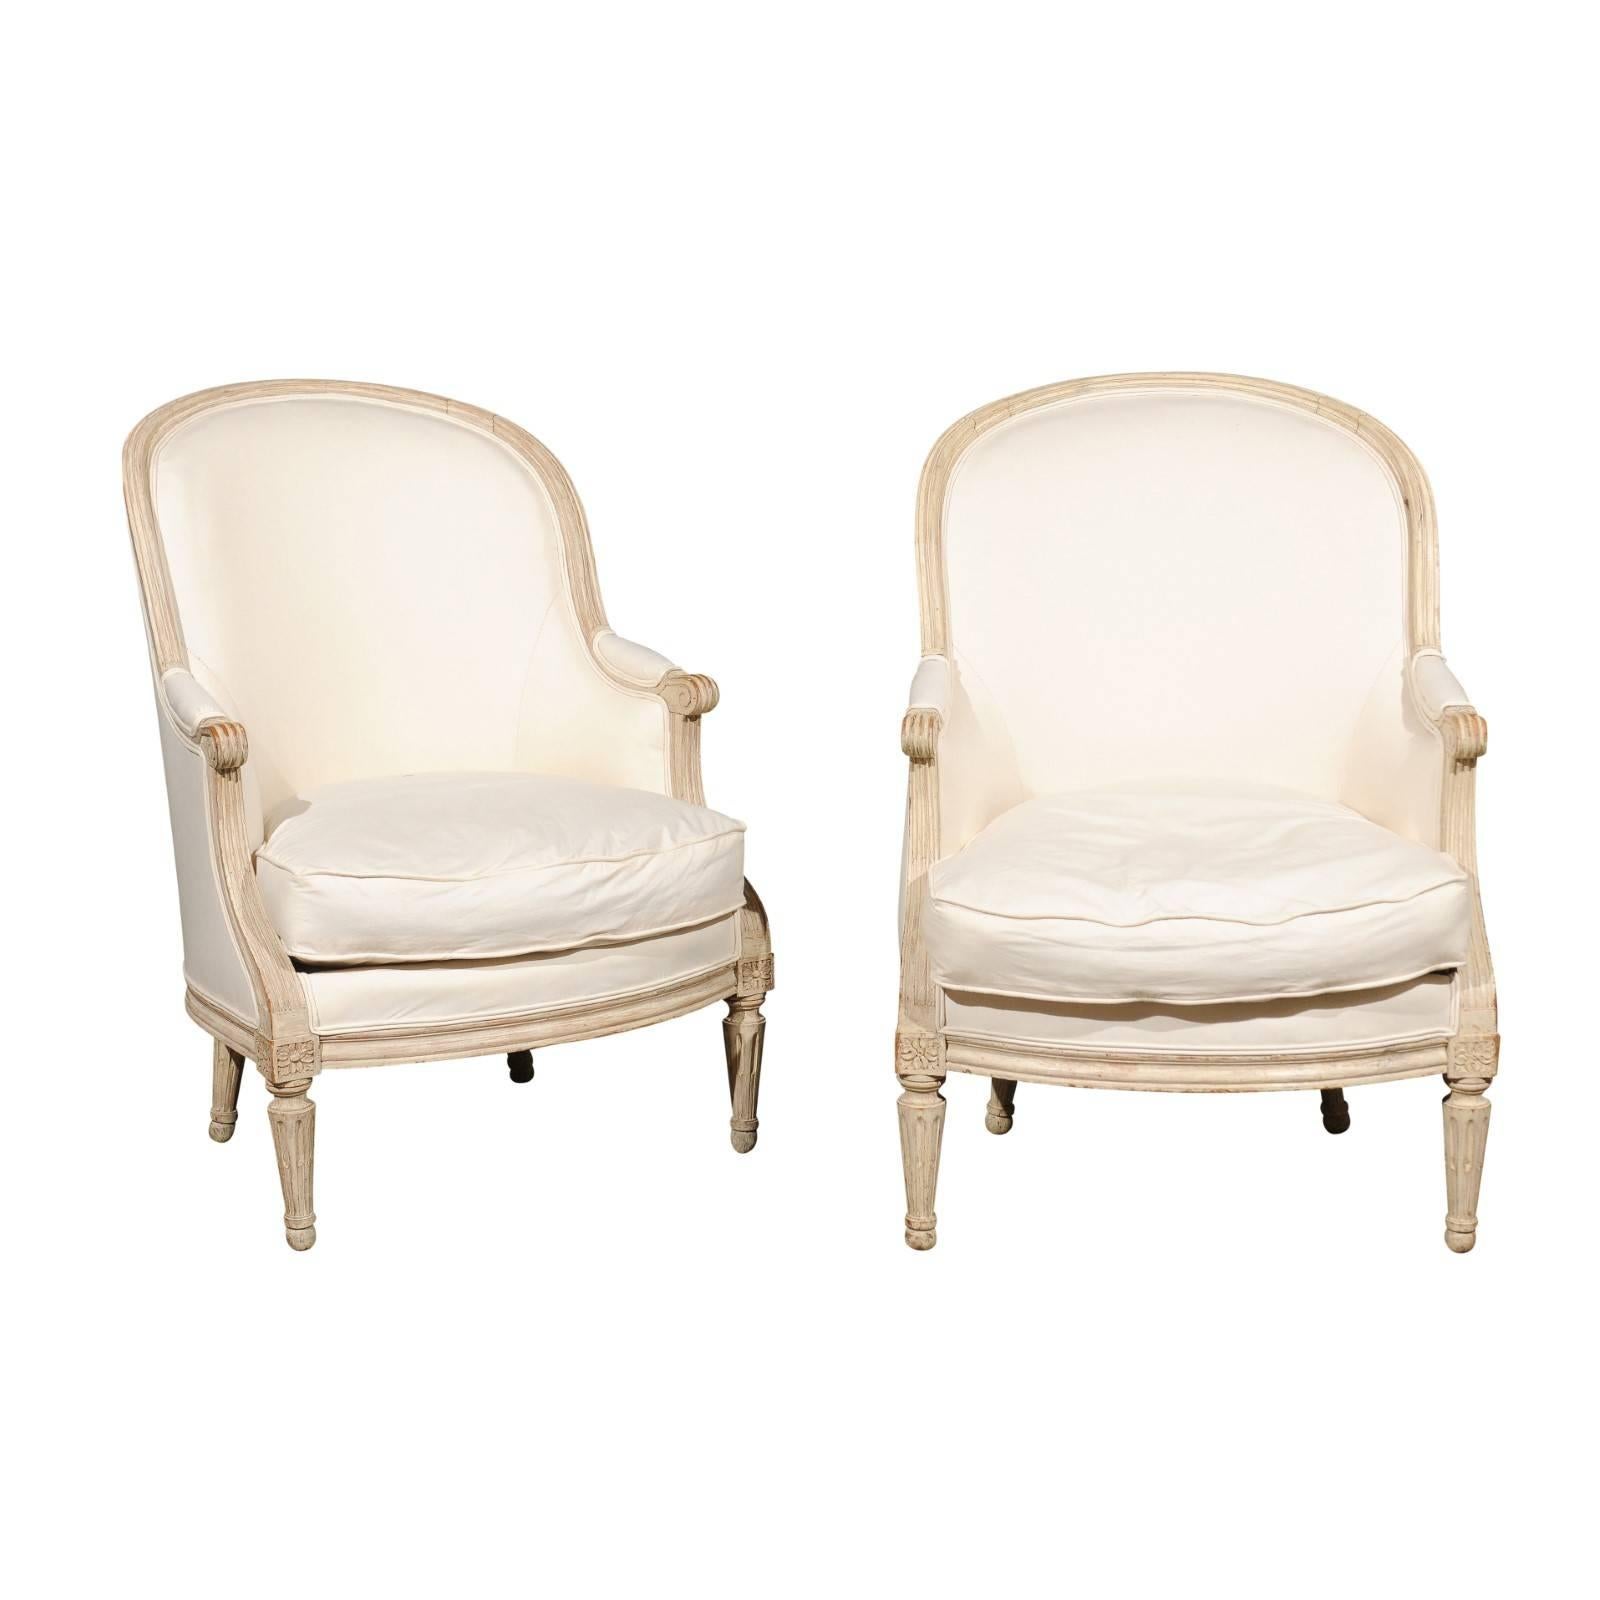 Swedish 19th Century Pair of Bergere Chairs